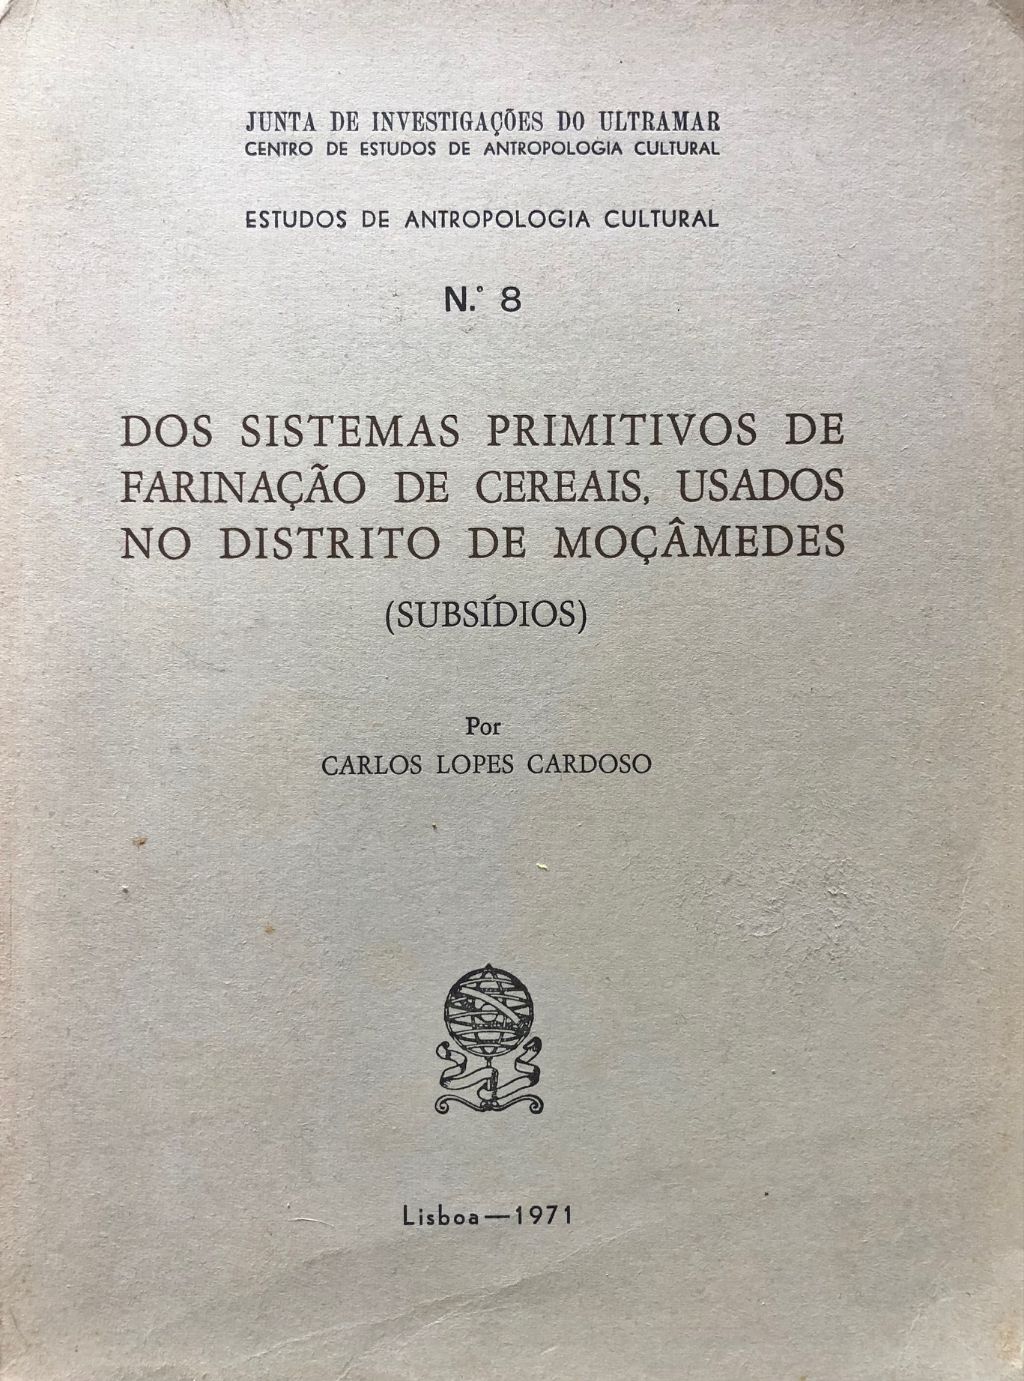 (African - Mozambique) Carlos Lopes Cardoso. Dos Sistemas Primitivos de Farinacao de Cereais, usados no Distrito de Mocamedes